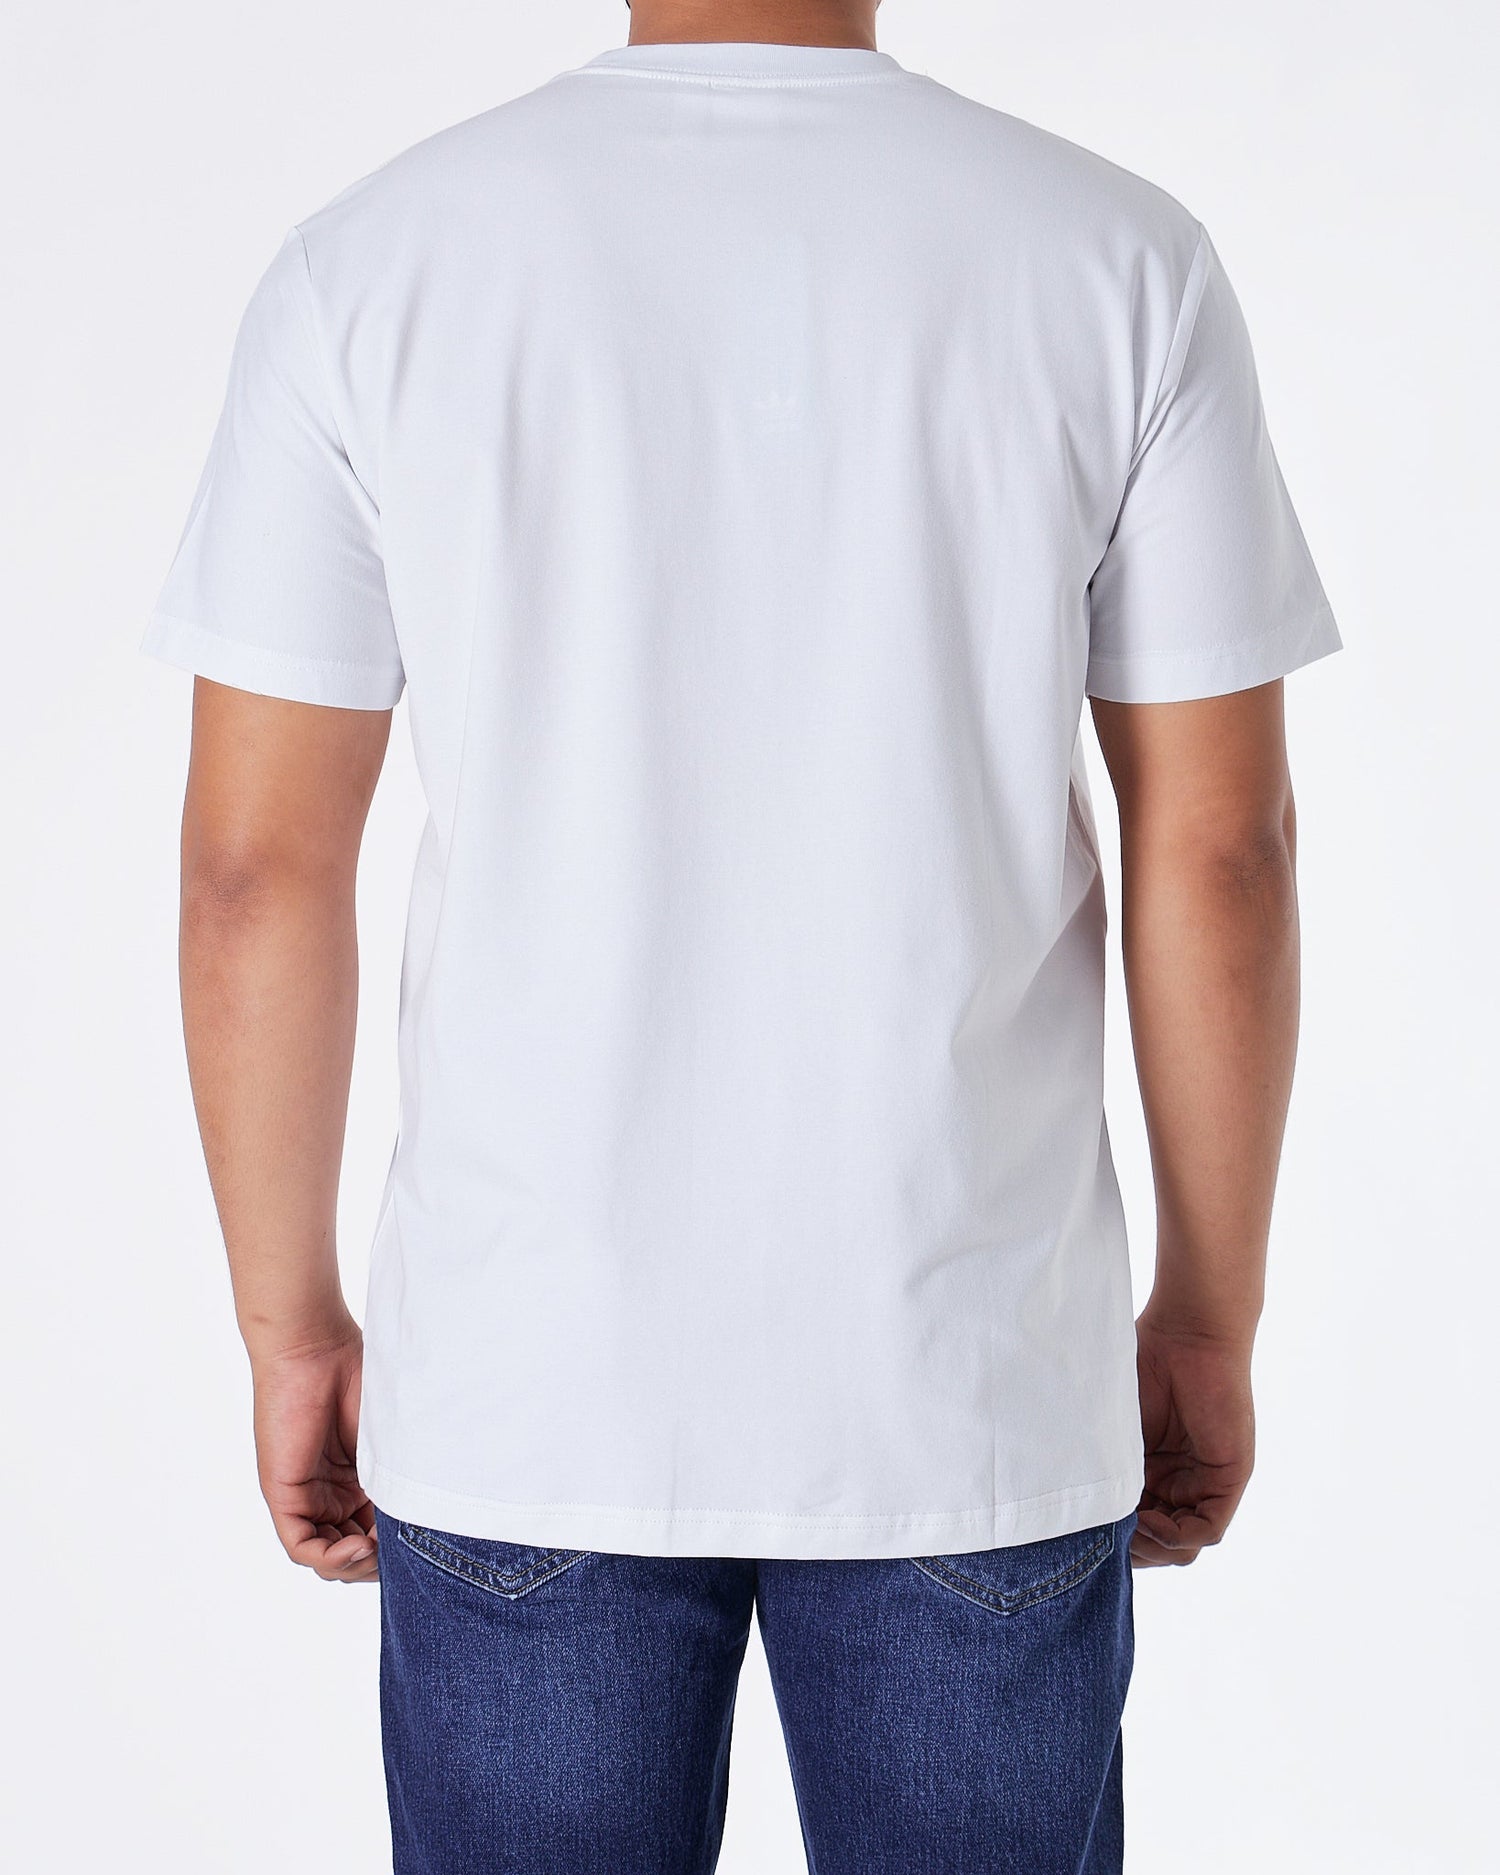 MOI OUTFIT-ADI Graphic Printed Men White T-Shirt 15.90